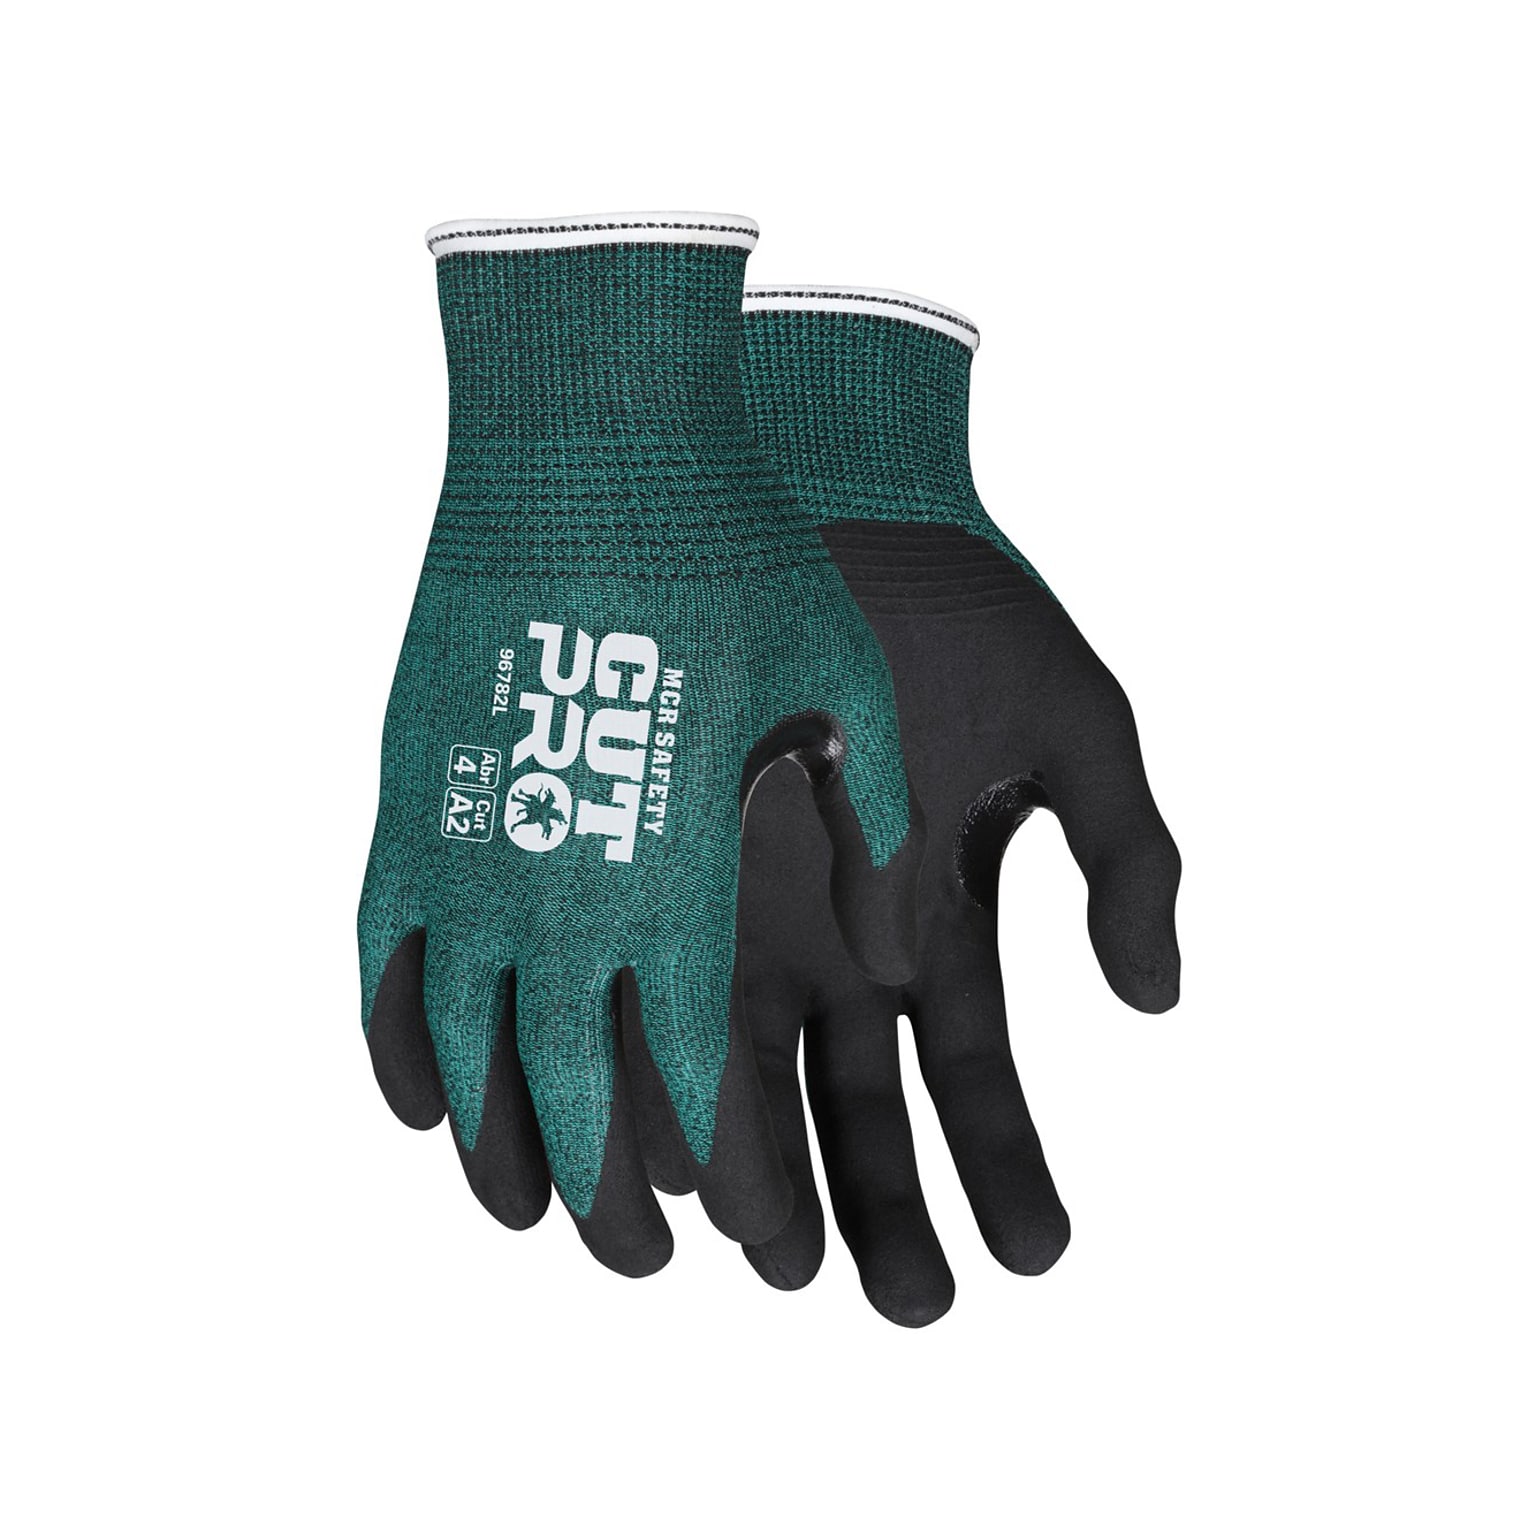 MCR Safety Cut Pro Hypermax Fiber/Nitrile Work Gloves, Large, A2 Cut Level, Green/Black, Pair (96782L)